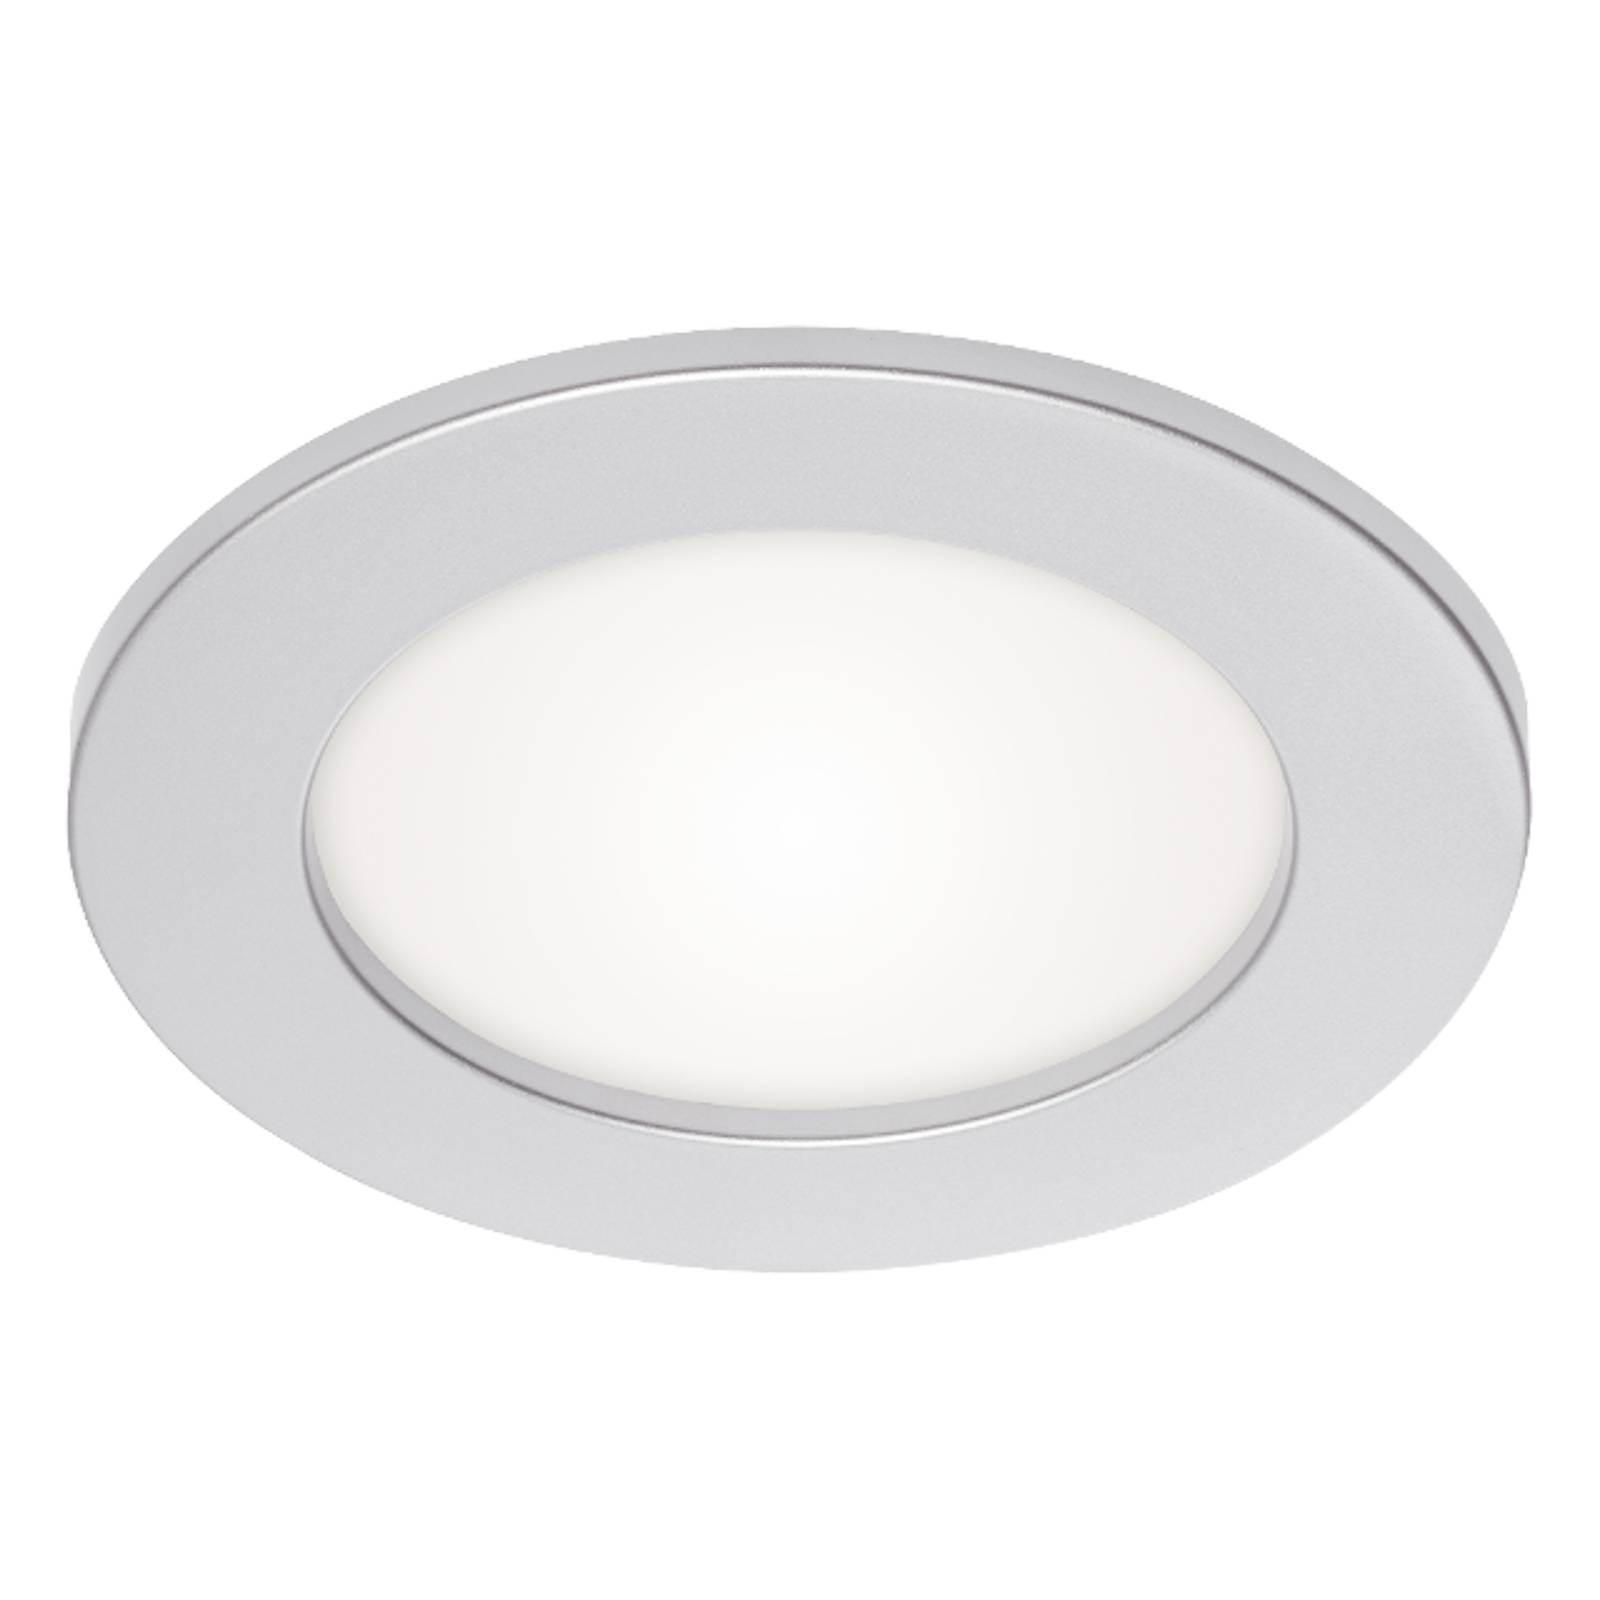 Prios Cadance LED recessed light, silver, 22 cm